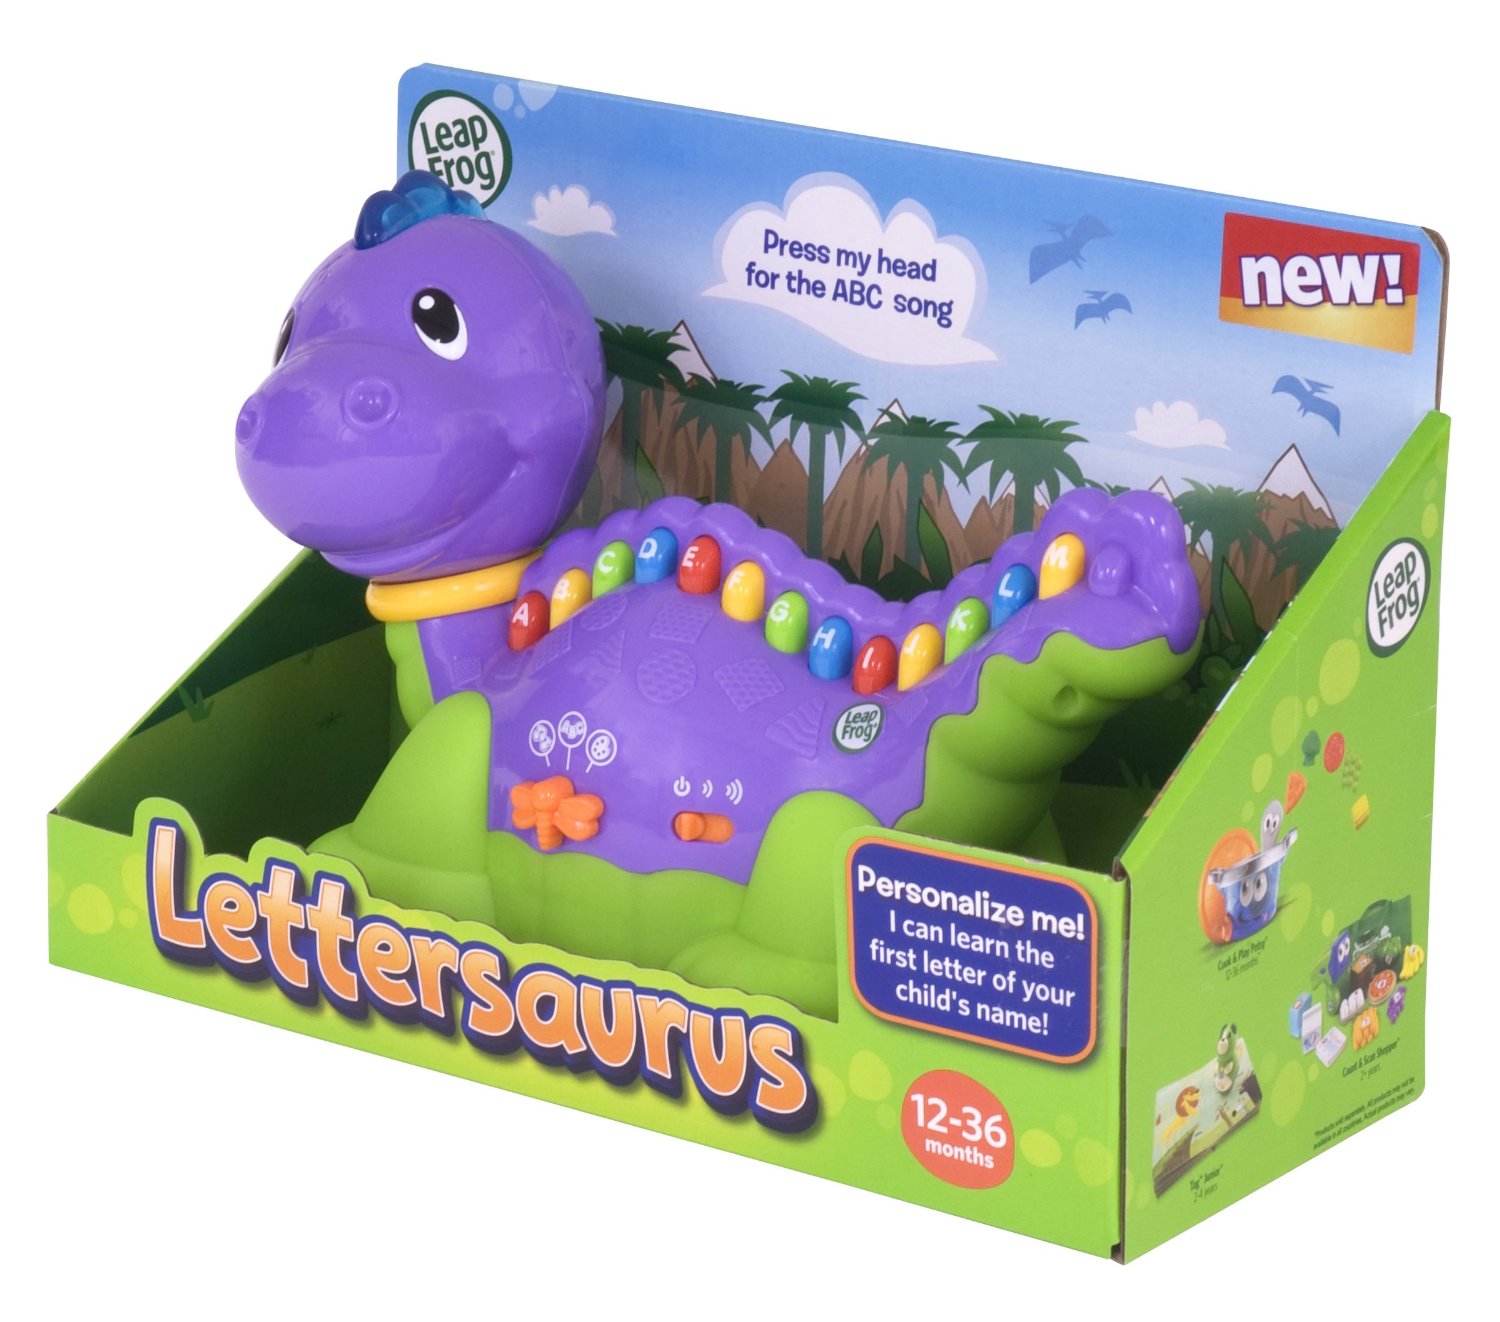 Lettersaurus